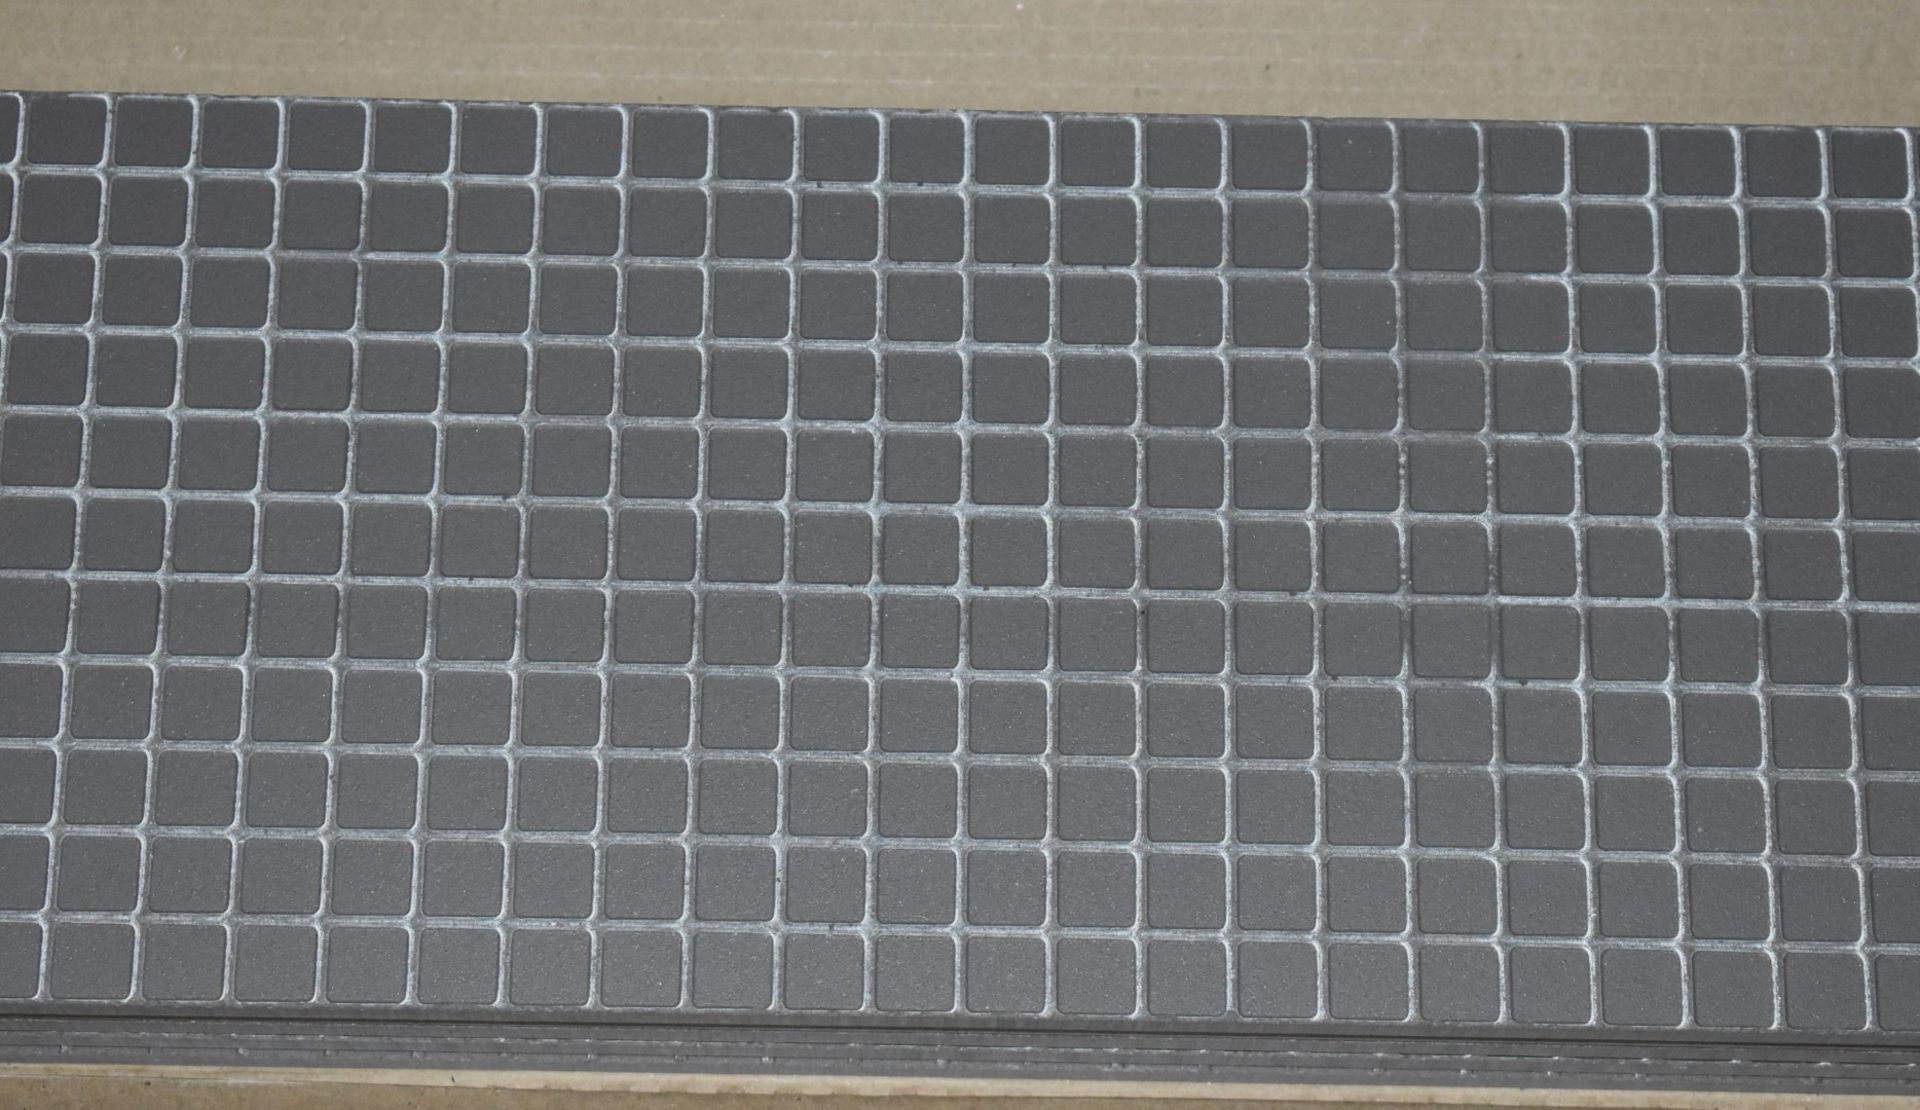 12 x Boxes of RAK Porcelain Floor or Wall Tiles - M Project Wood Design in Dark Grey - 19.5 x 120 cm - Image 5 of 11